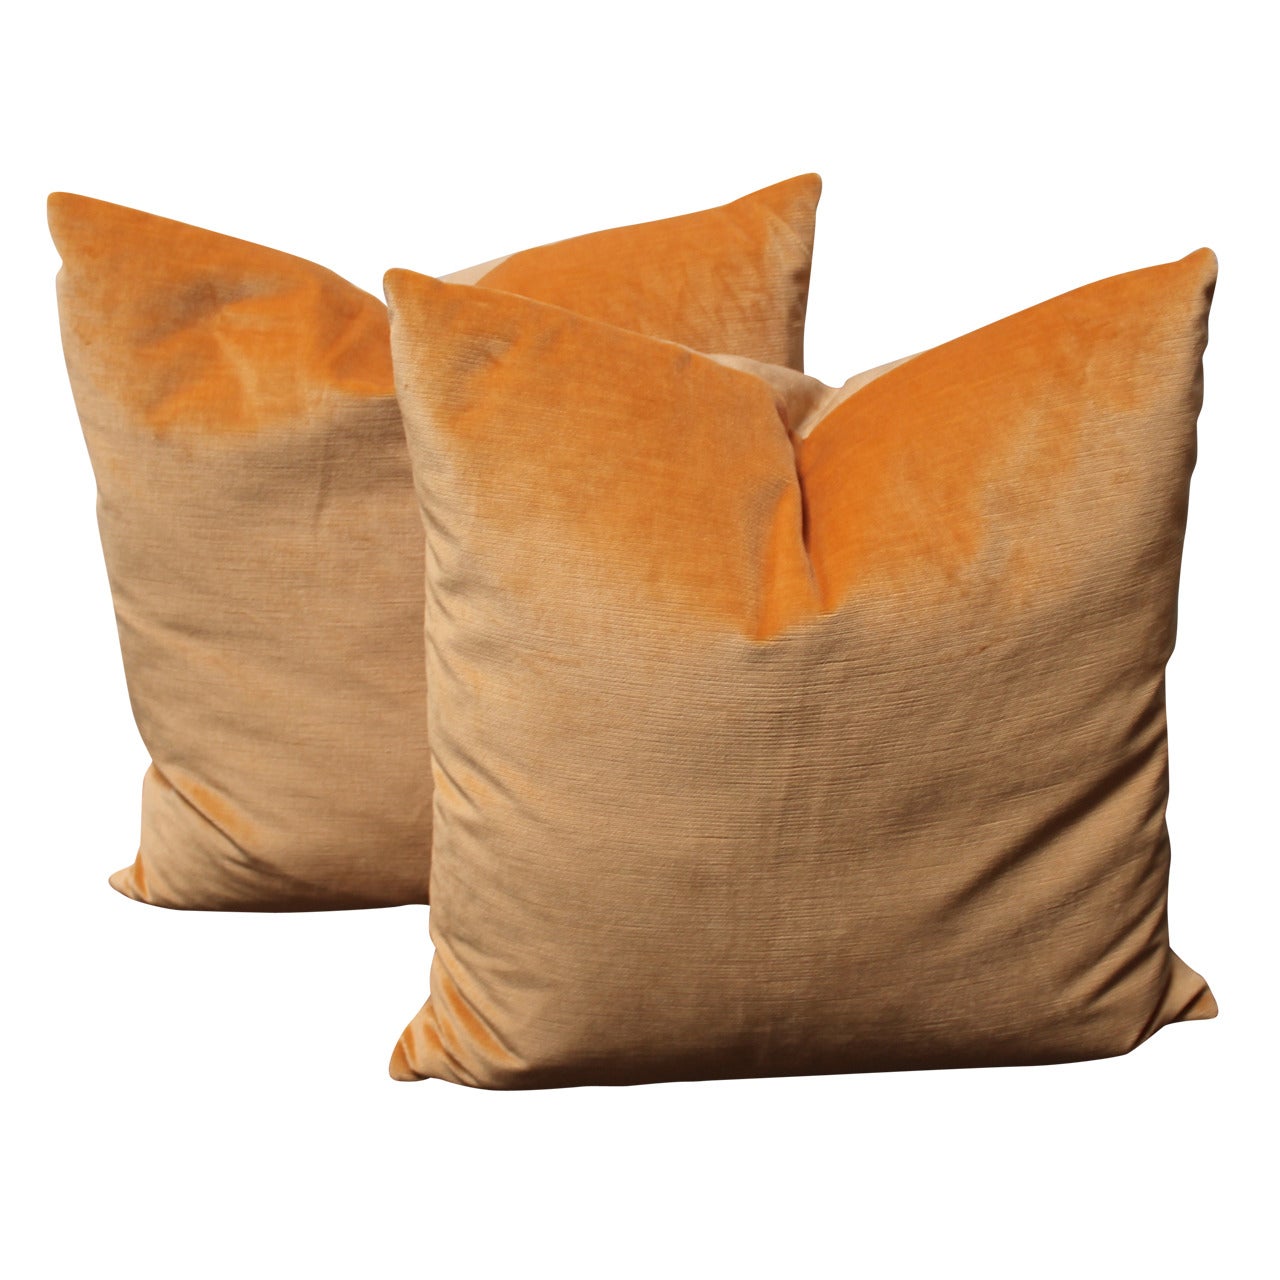 Pair of Peach Velvet Pillows With Linen Backing